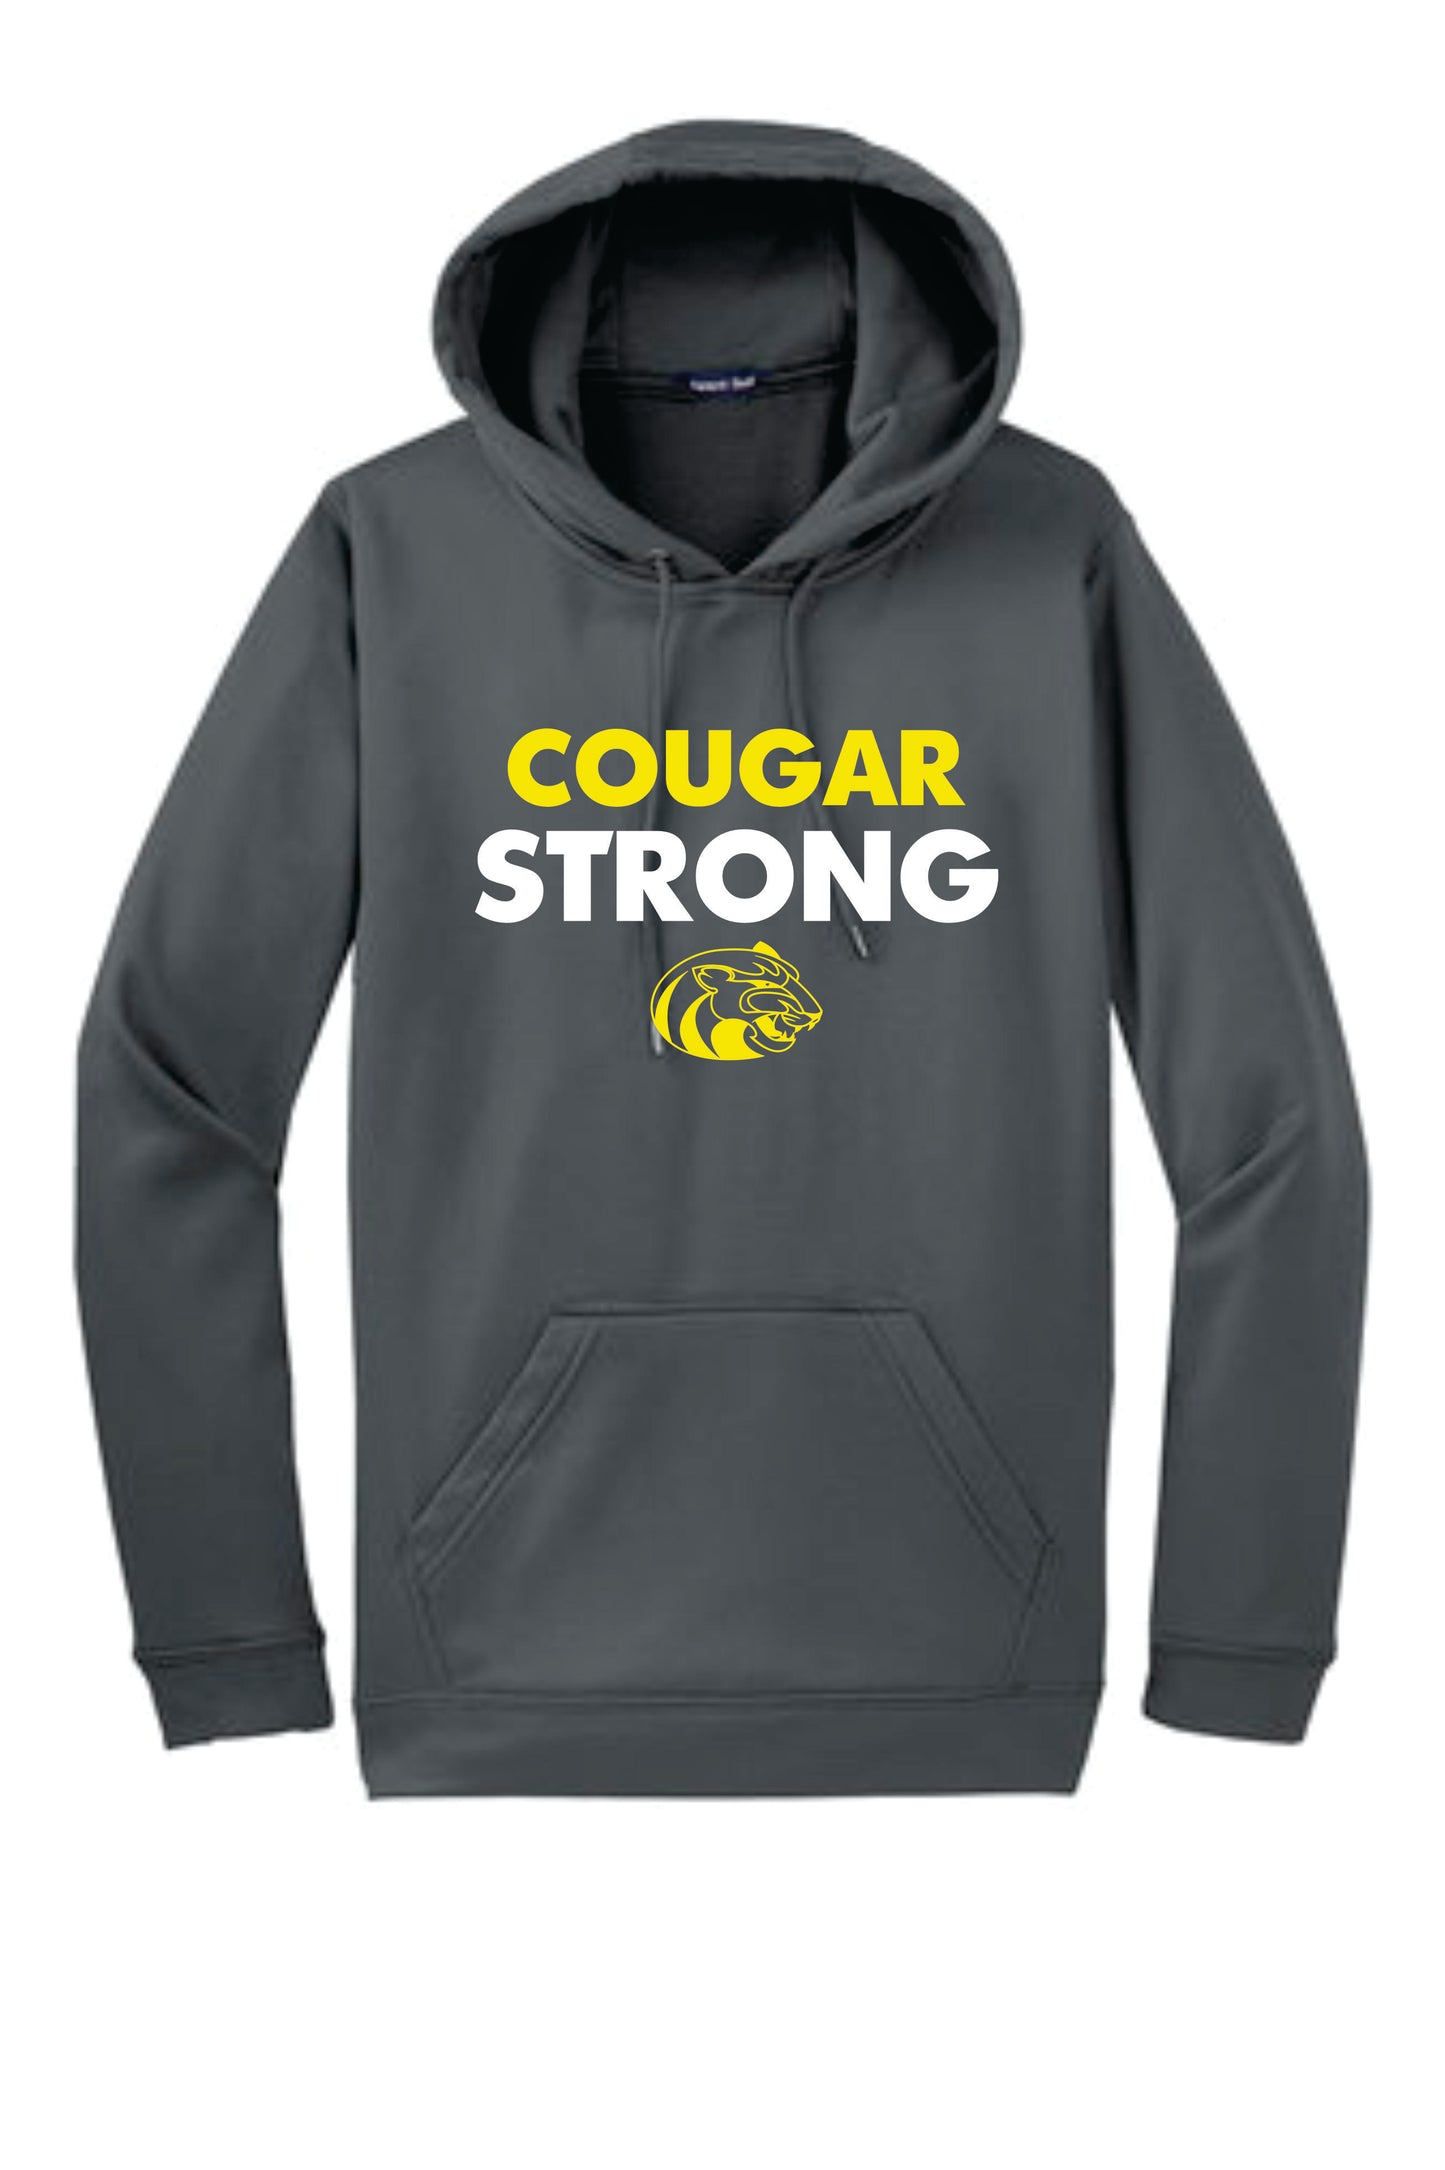 WCMS Cougar Strong logo